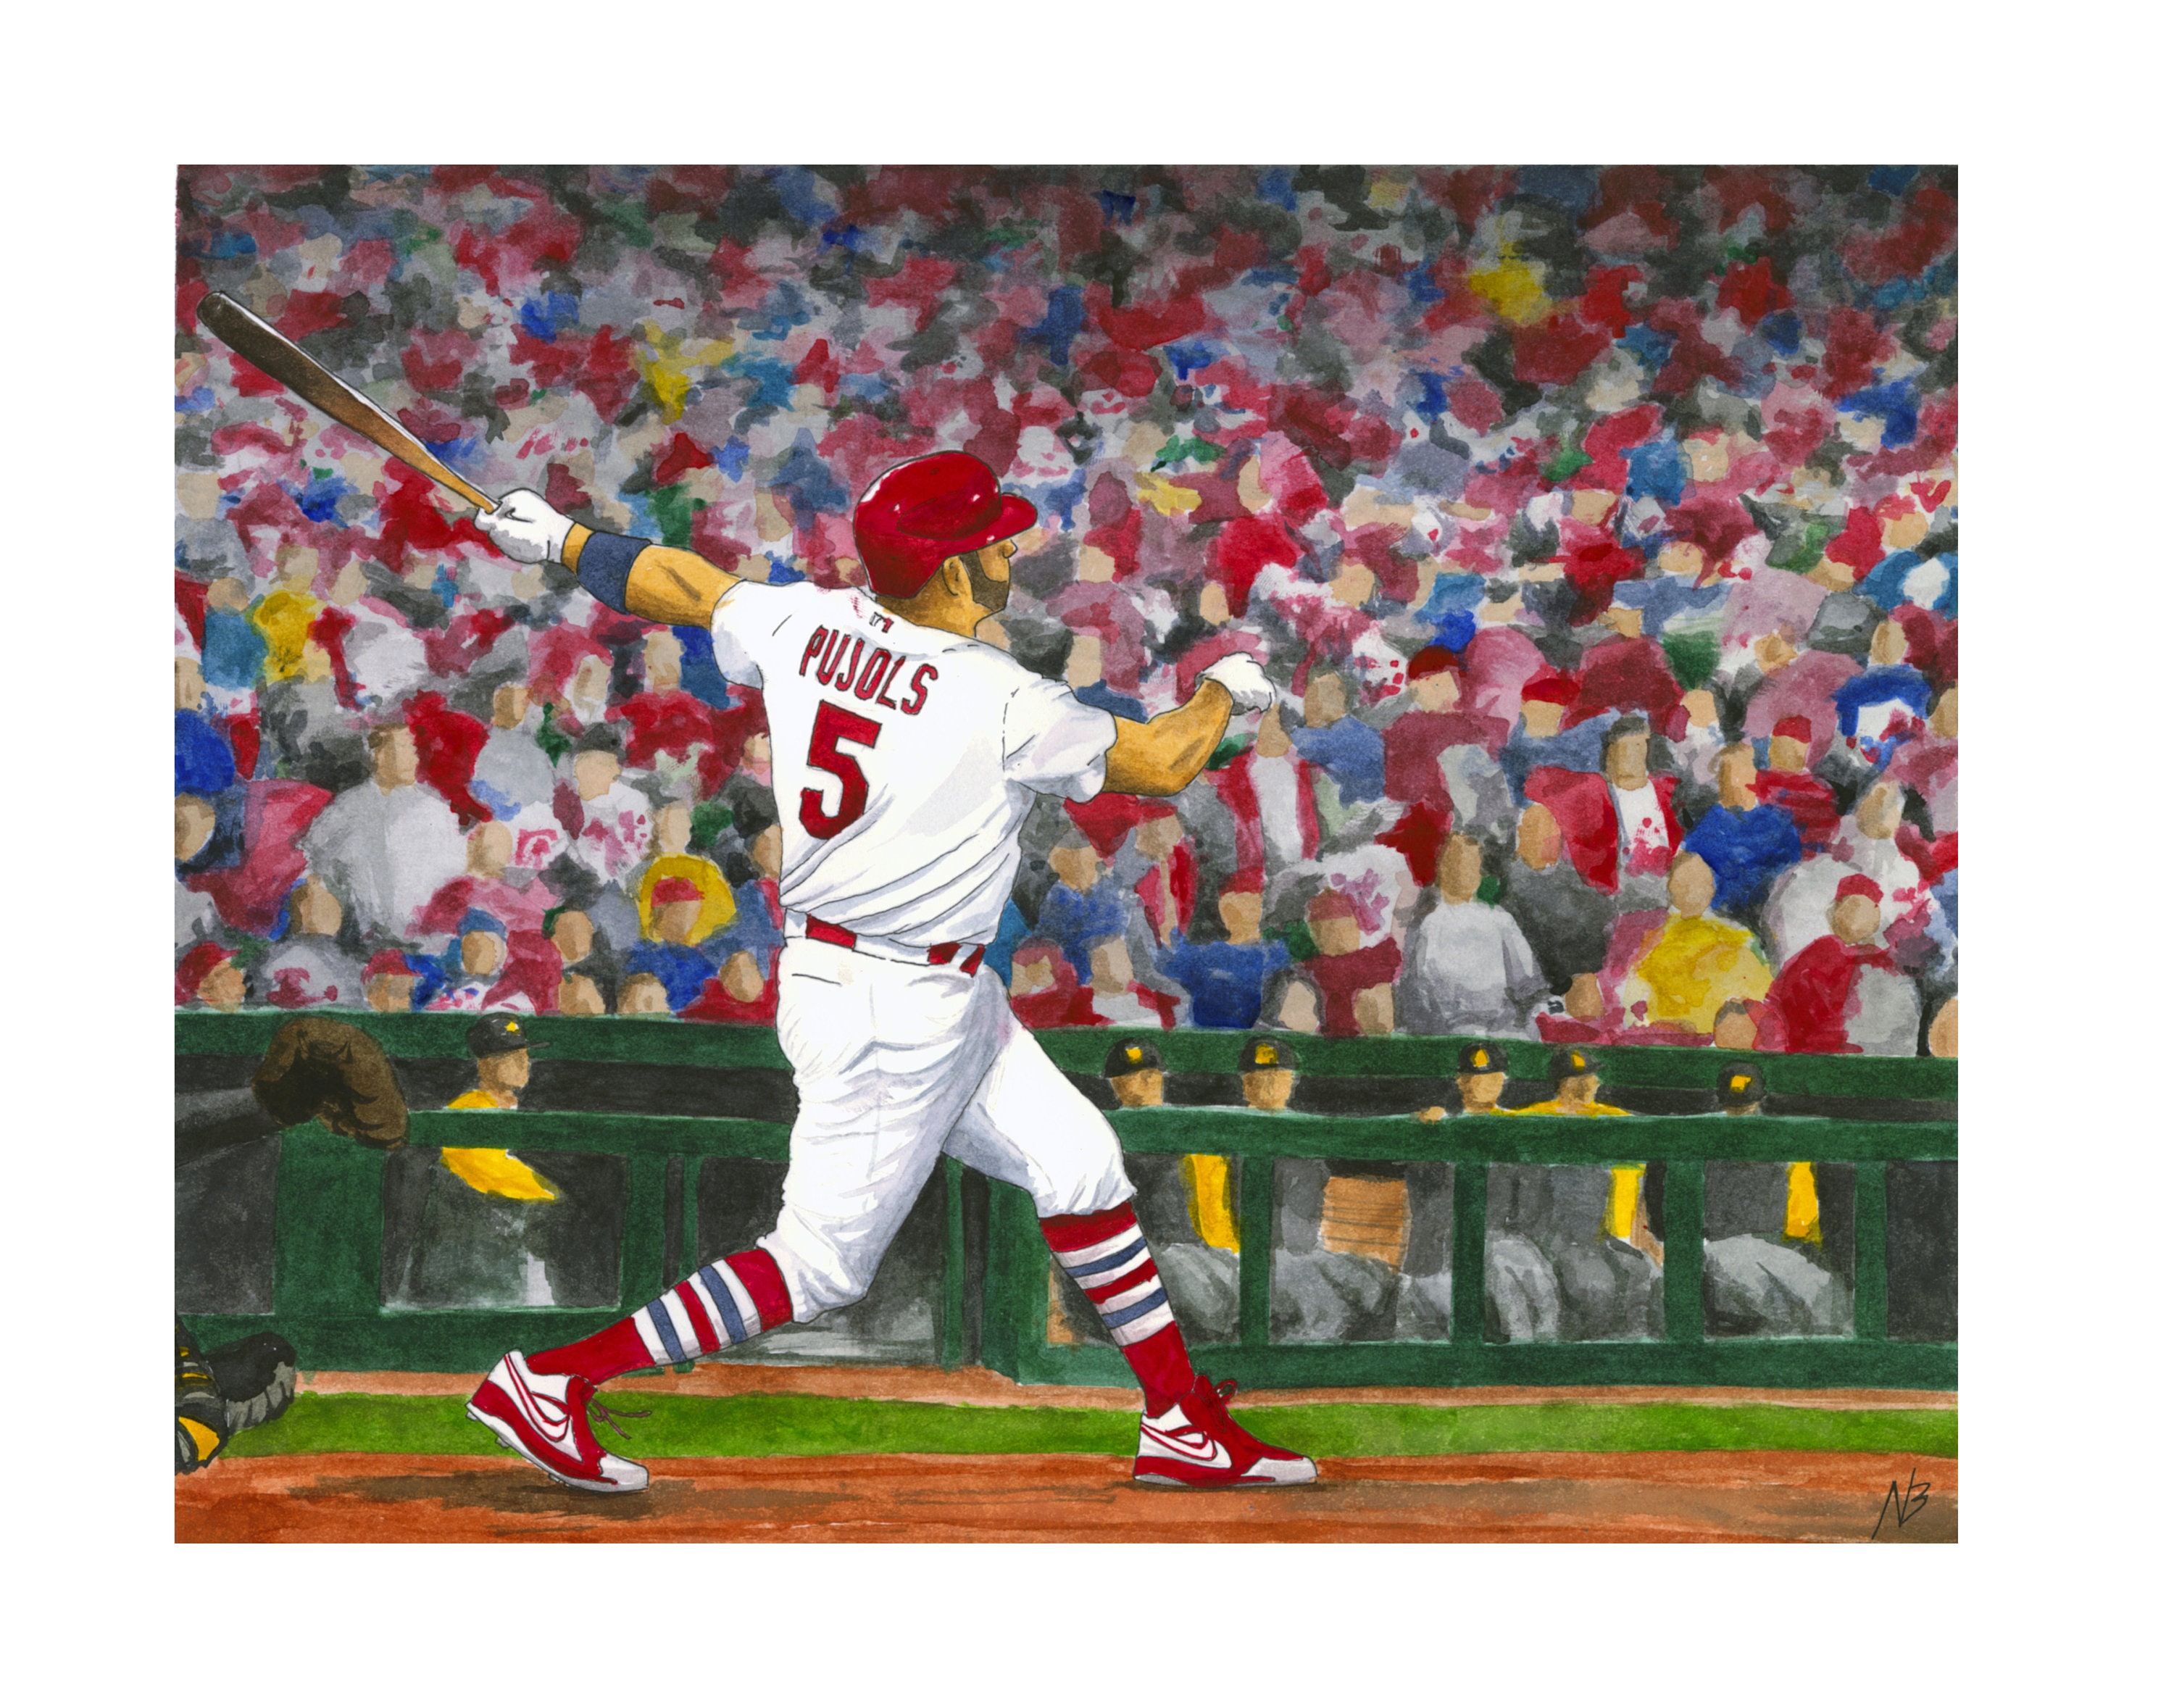 Adam Wainwright, Albert Pujols, & Yadier Molina St. Louis Cardinals 8 x  10 Baseball Photo - Dynasty Sports & Framing